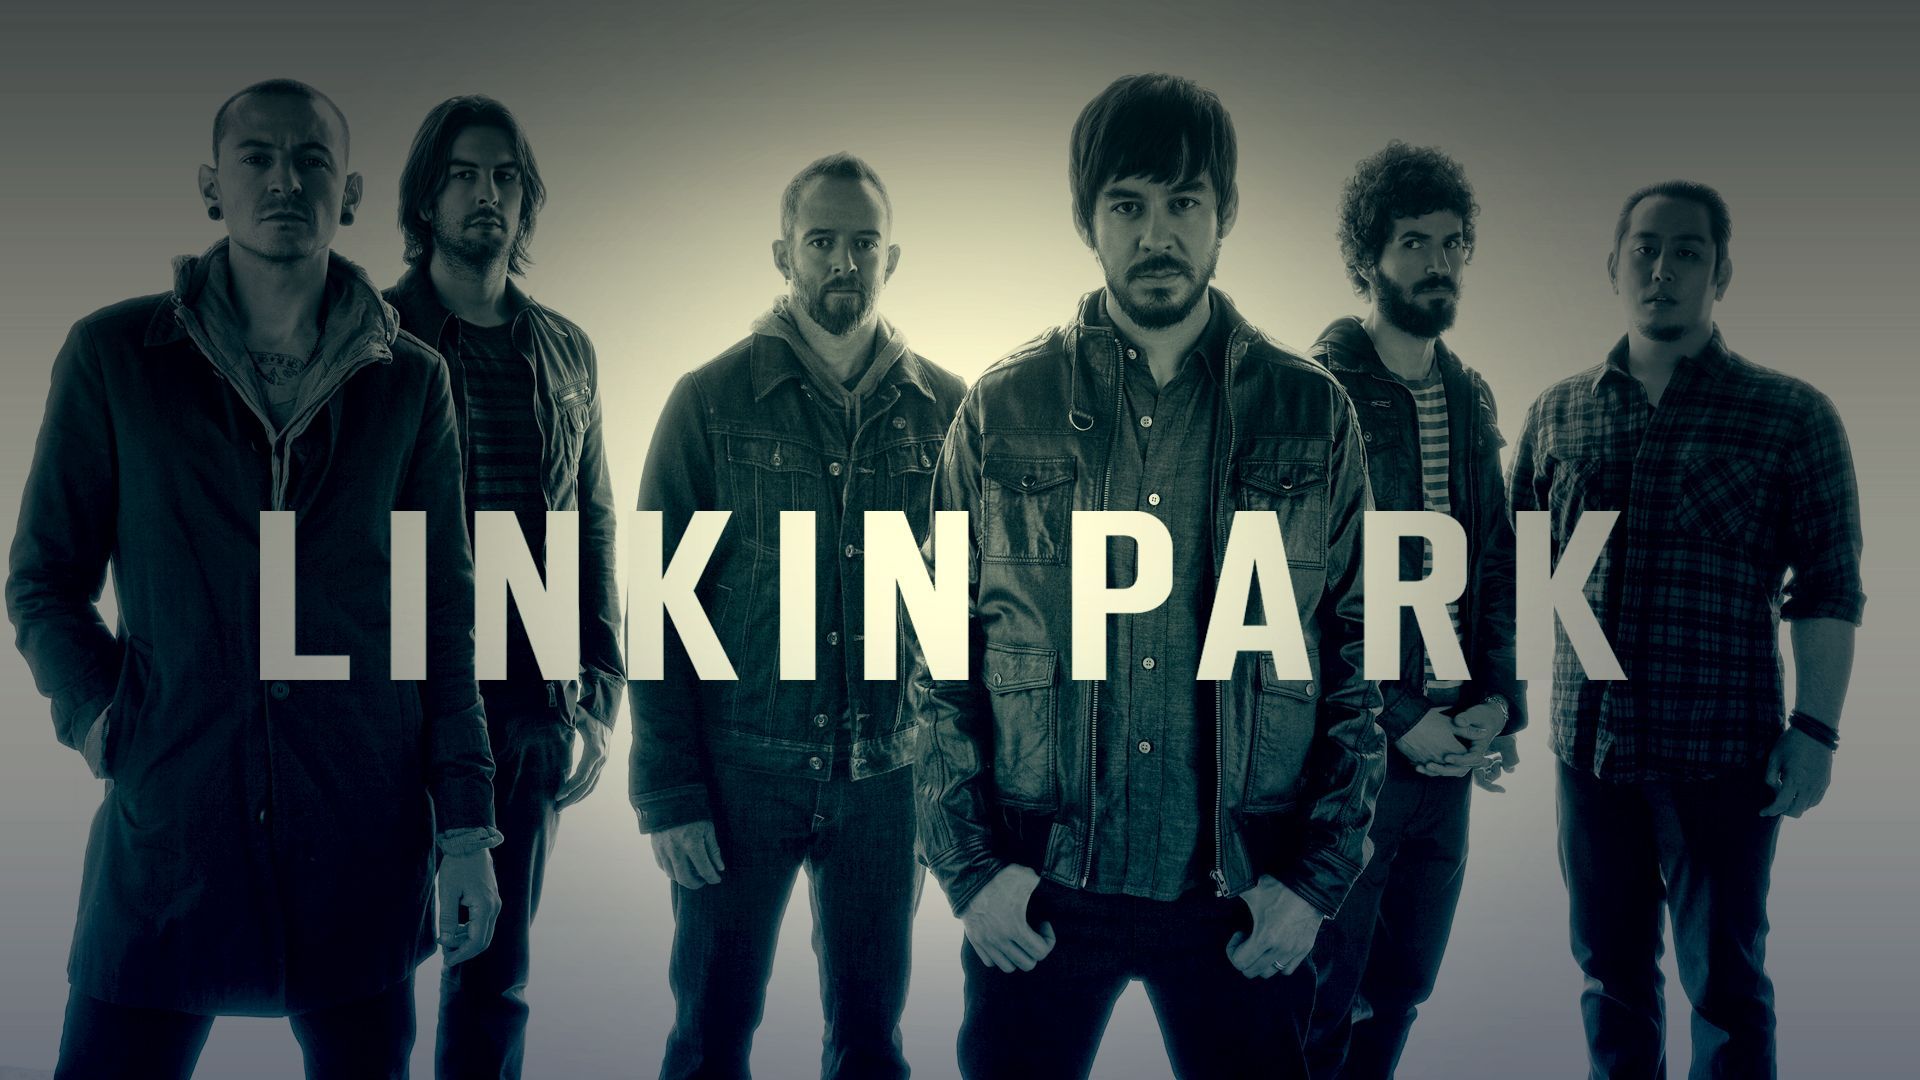 Linkin Park Wallpaper Full HD Dekstop Free 49008 Full HD Wallpaper ...